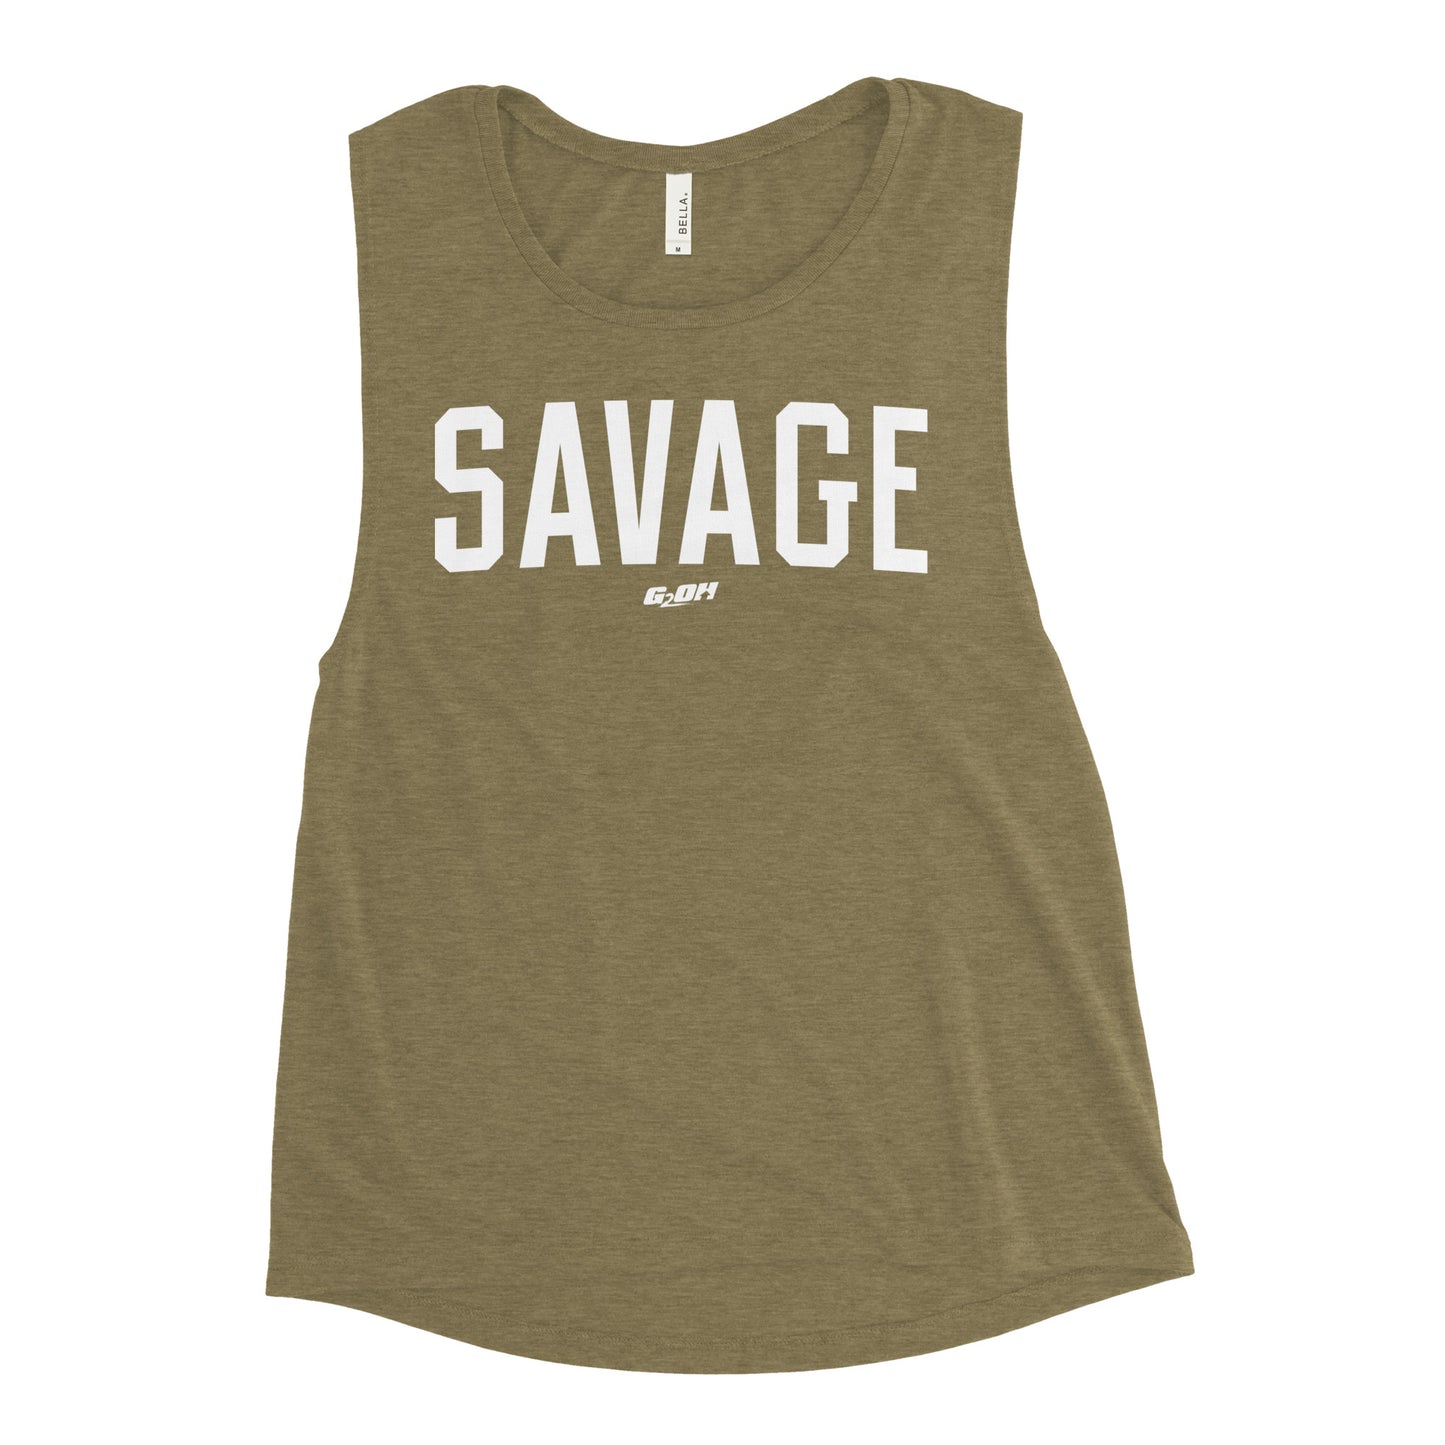 Savage Women's Muscle Tank